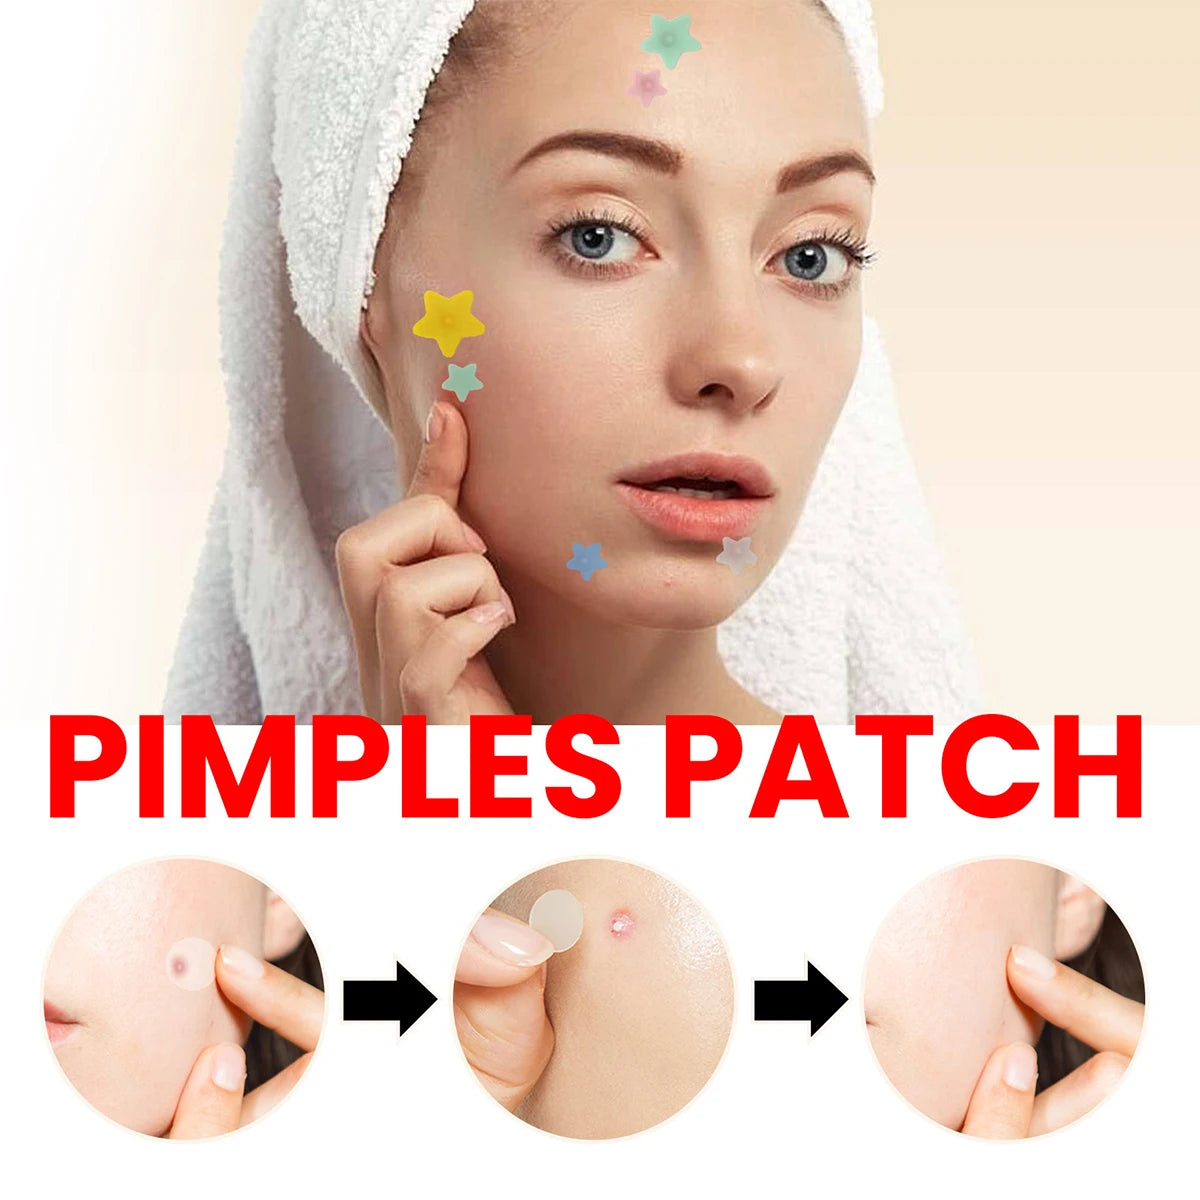 200 Star Shape Pimple Patches